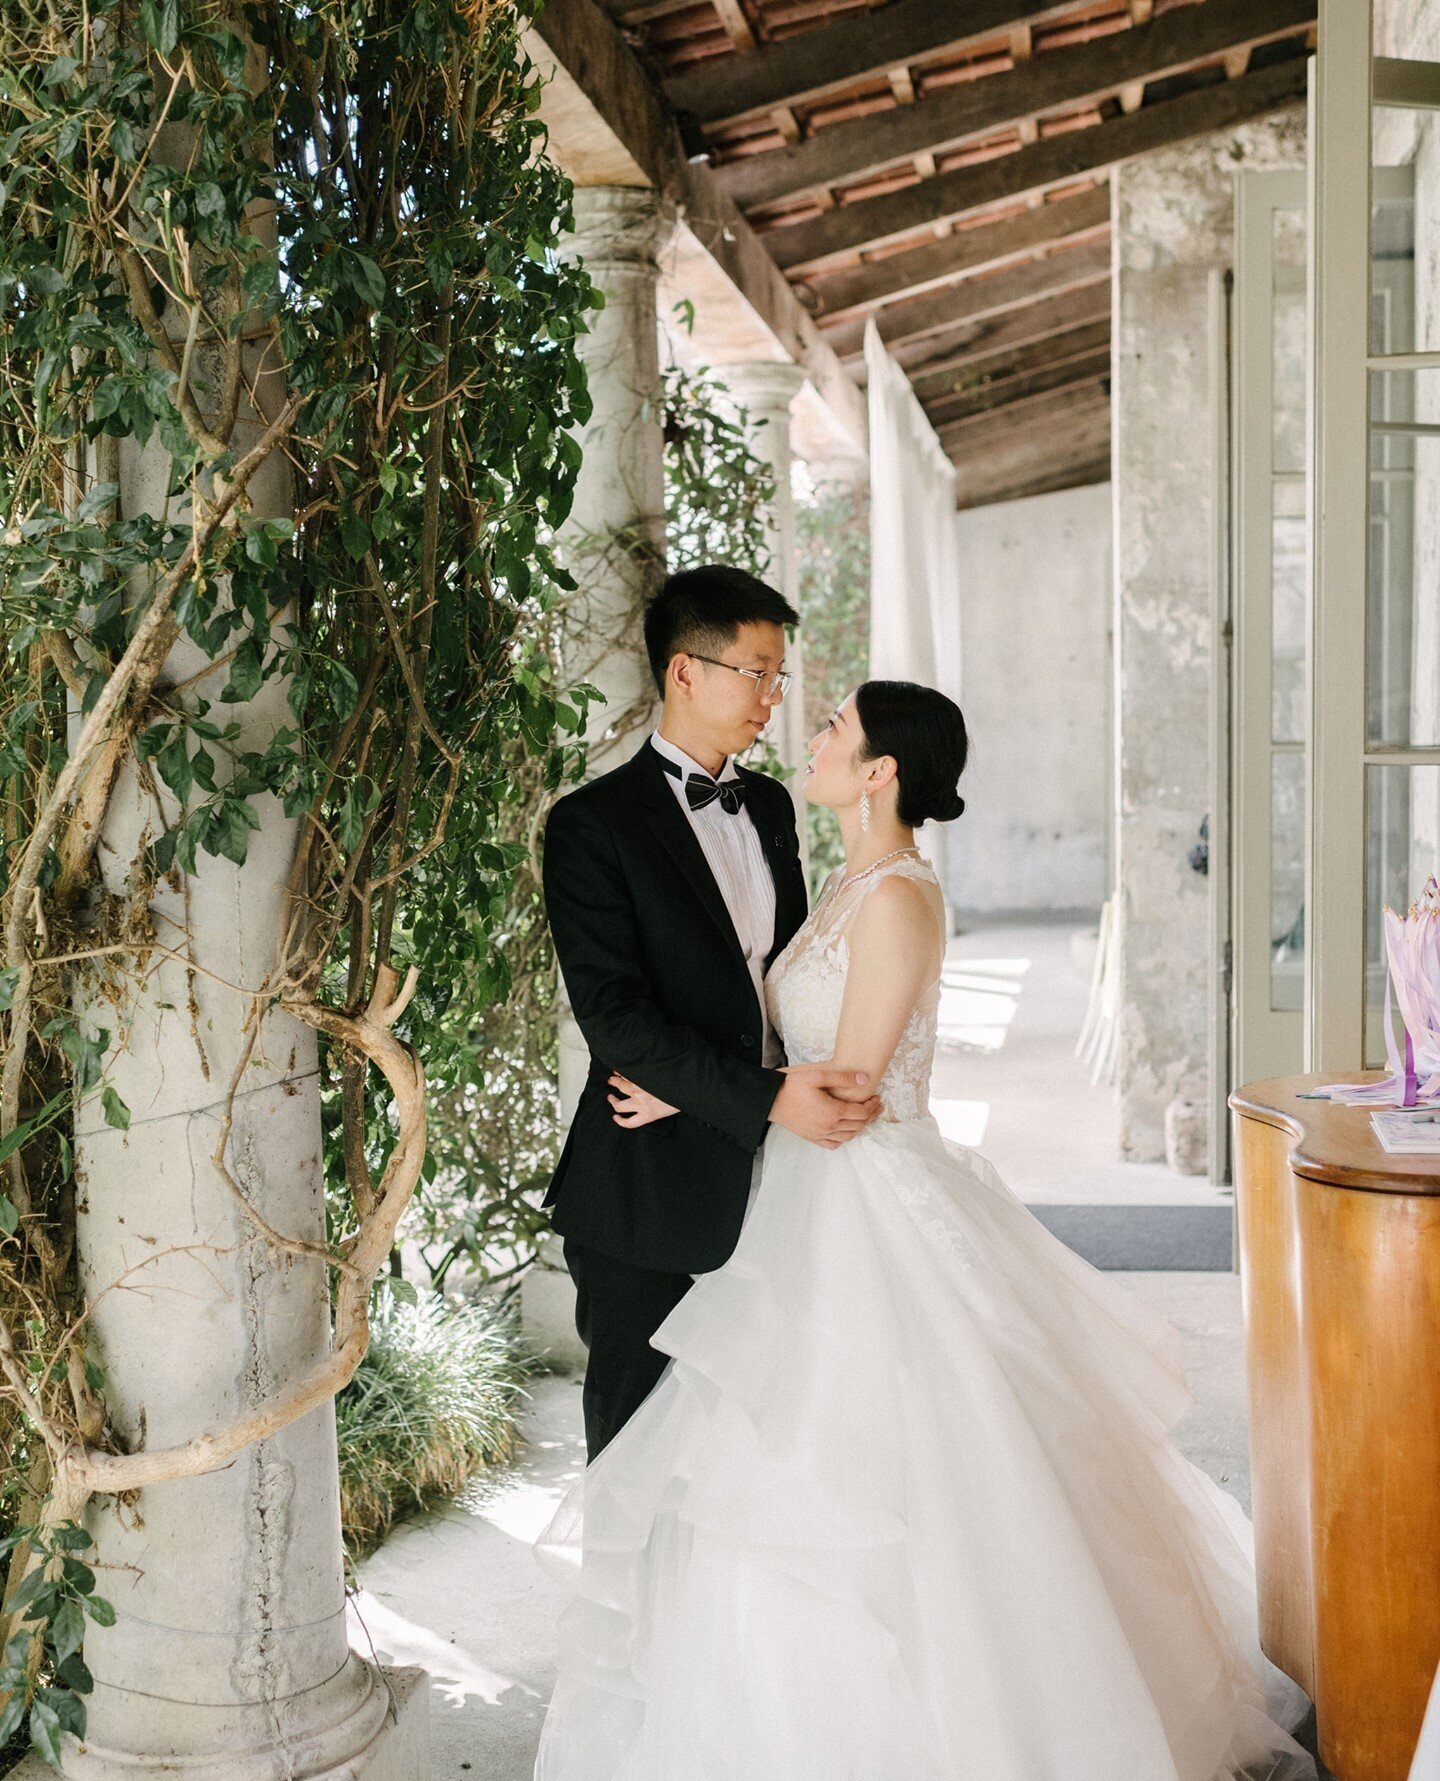 Cinderella moments are our specialty 👸🏻 ⁠
⁠
Clara &amp; Ron under the verandah at Mt Eden. ⁠
⁠
📸 @marionhweddings